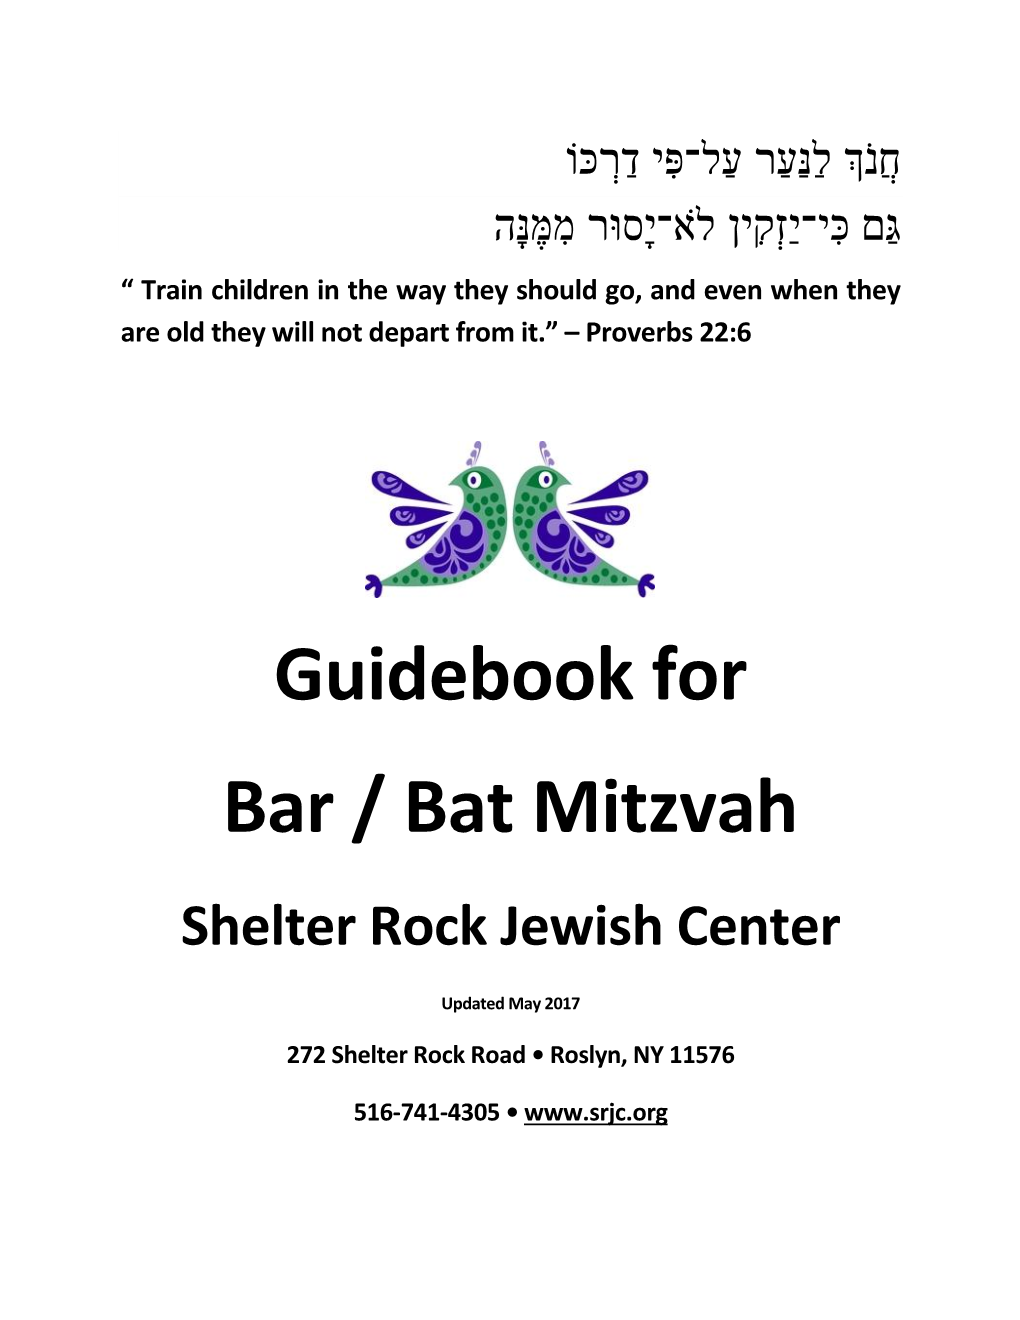 Guidebook for Bar / Bat Mitzvah Shelter Rock Jewish Center